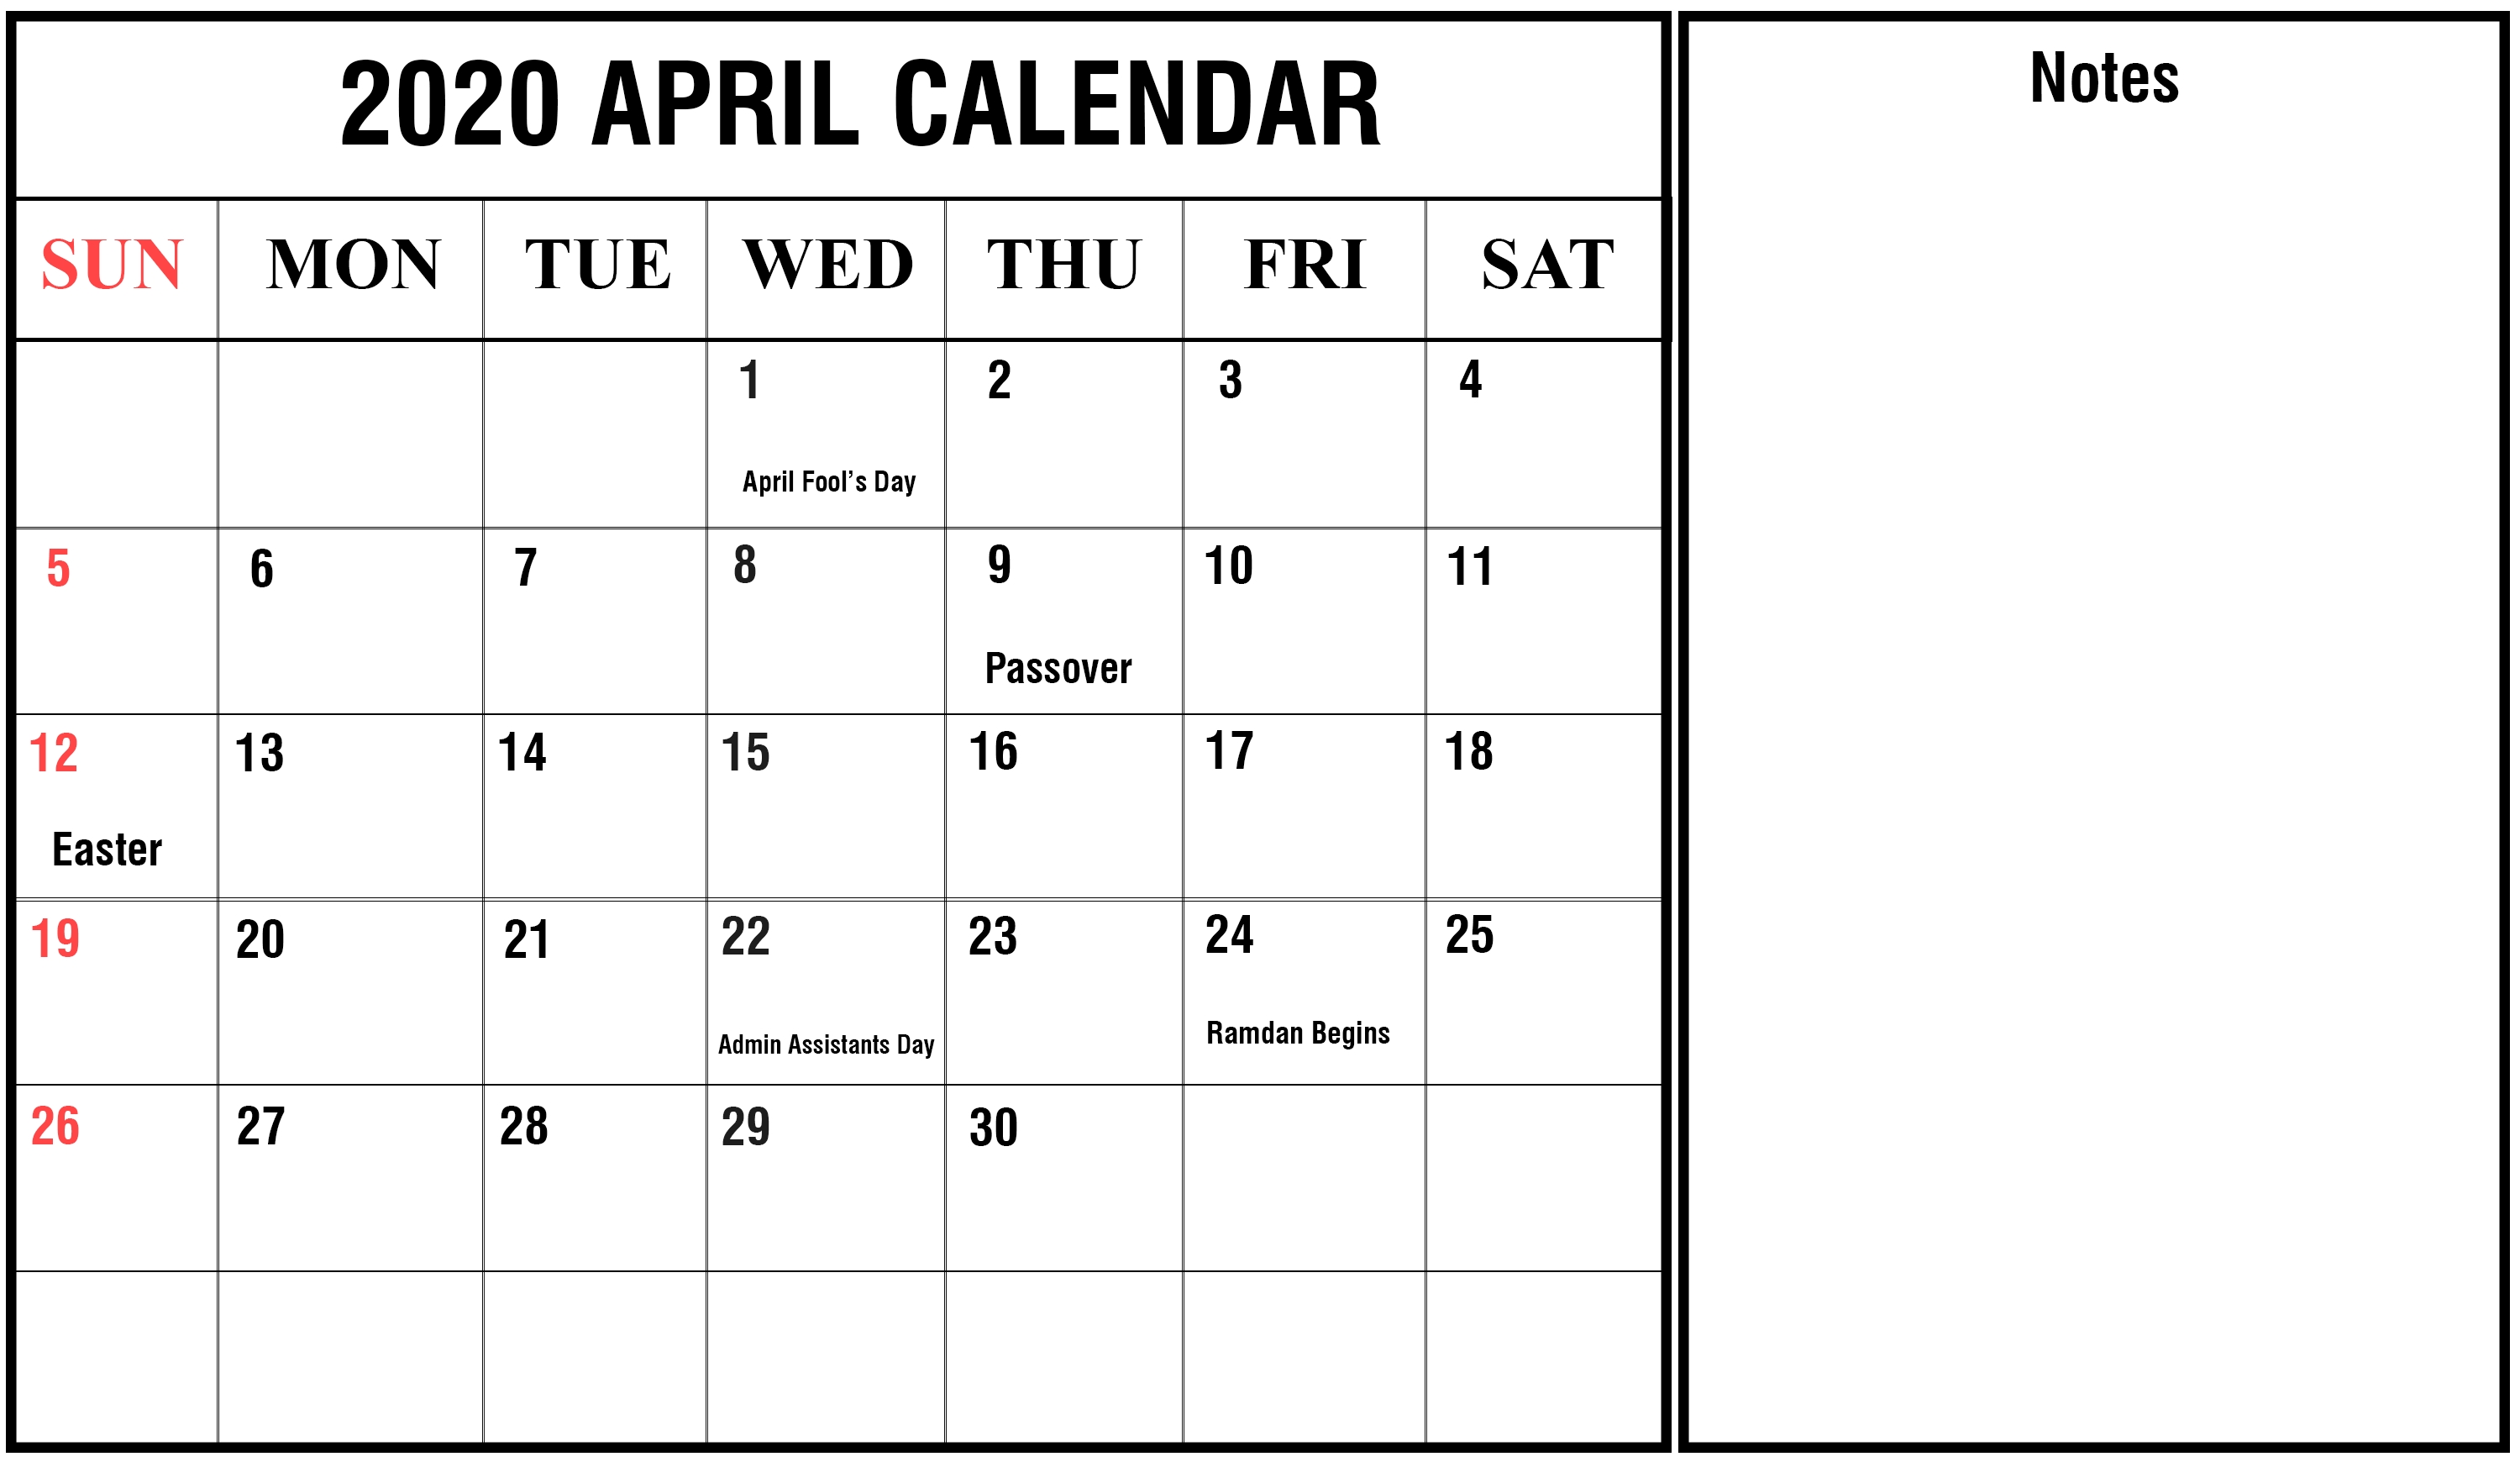 April 2020 Calendar Wallpapers - Top Free April 2020 Remarkable April 2020 Calendar Easter